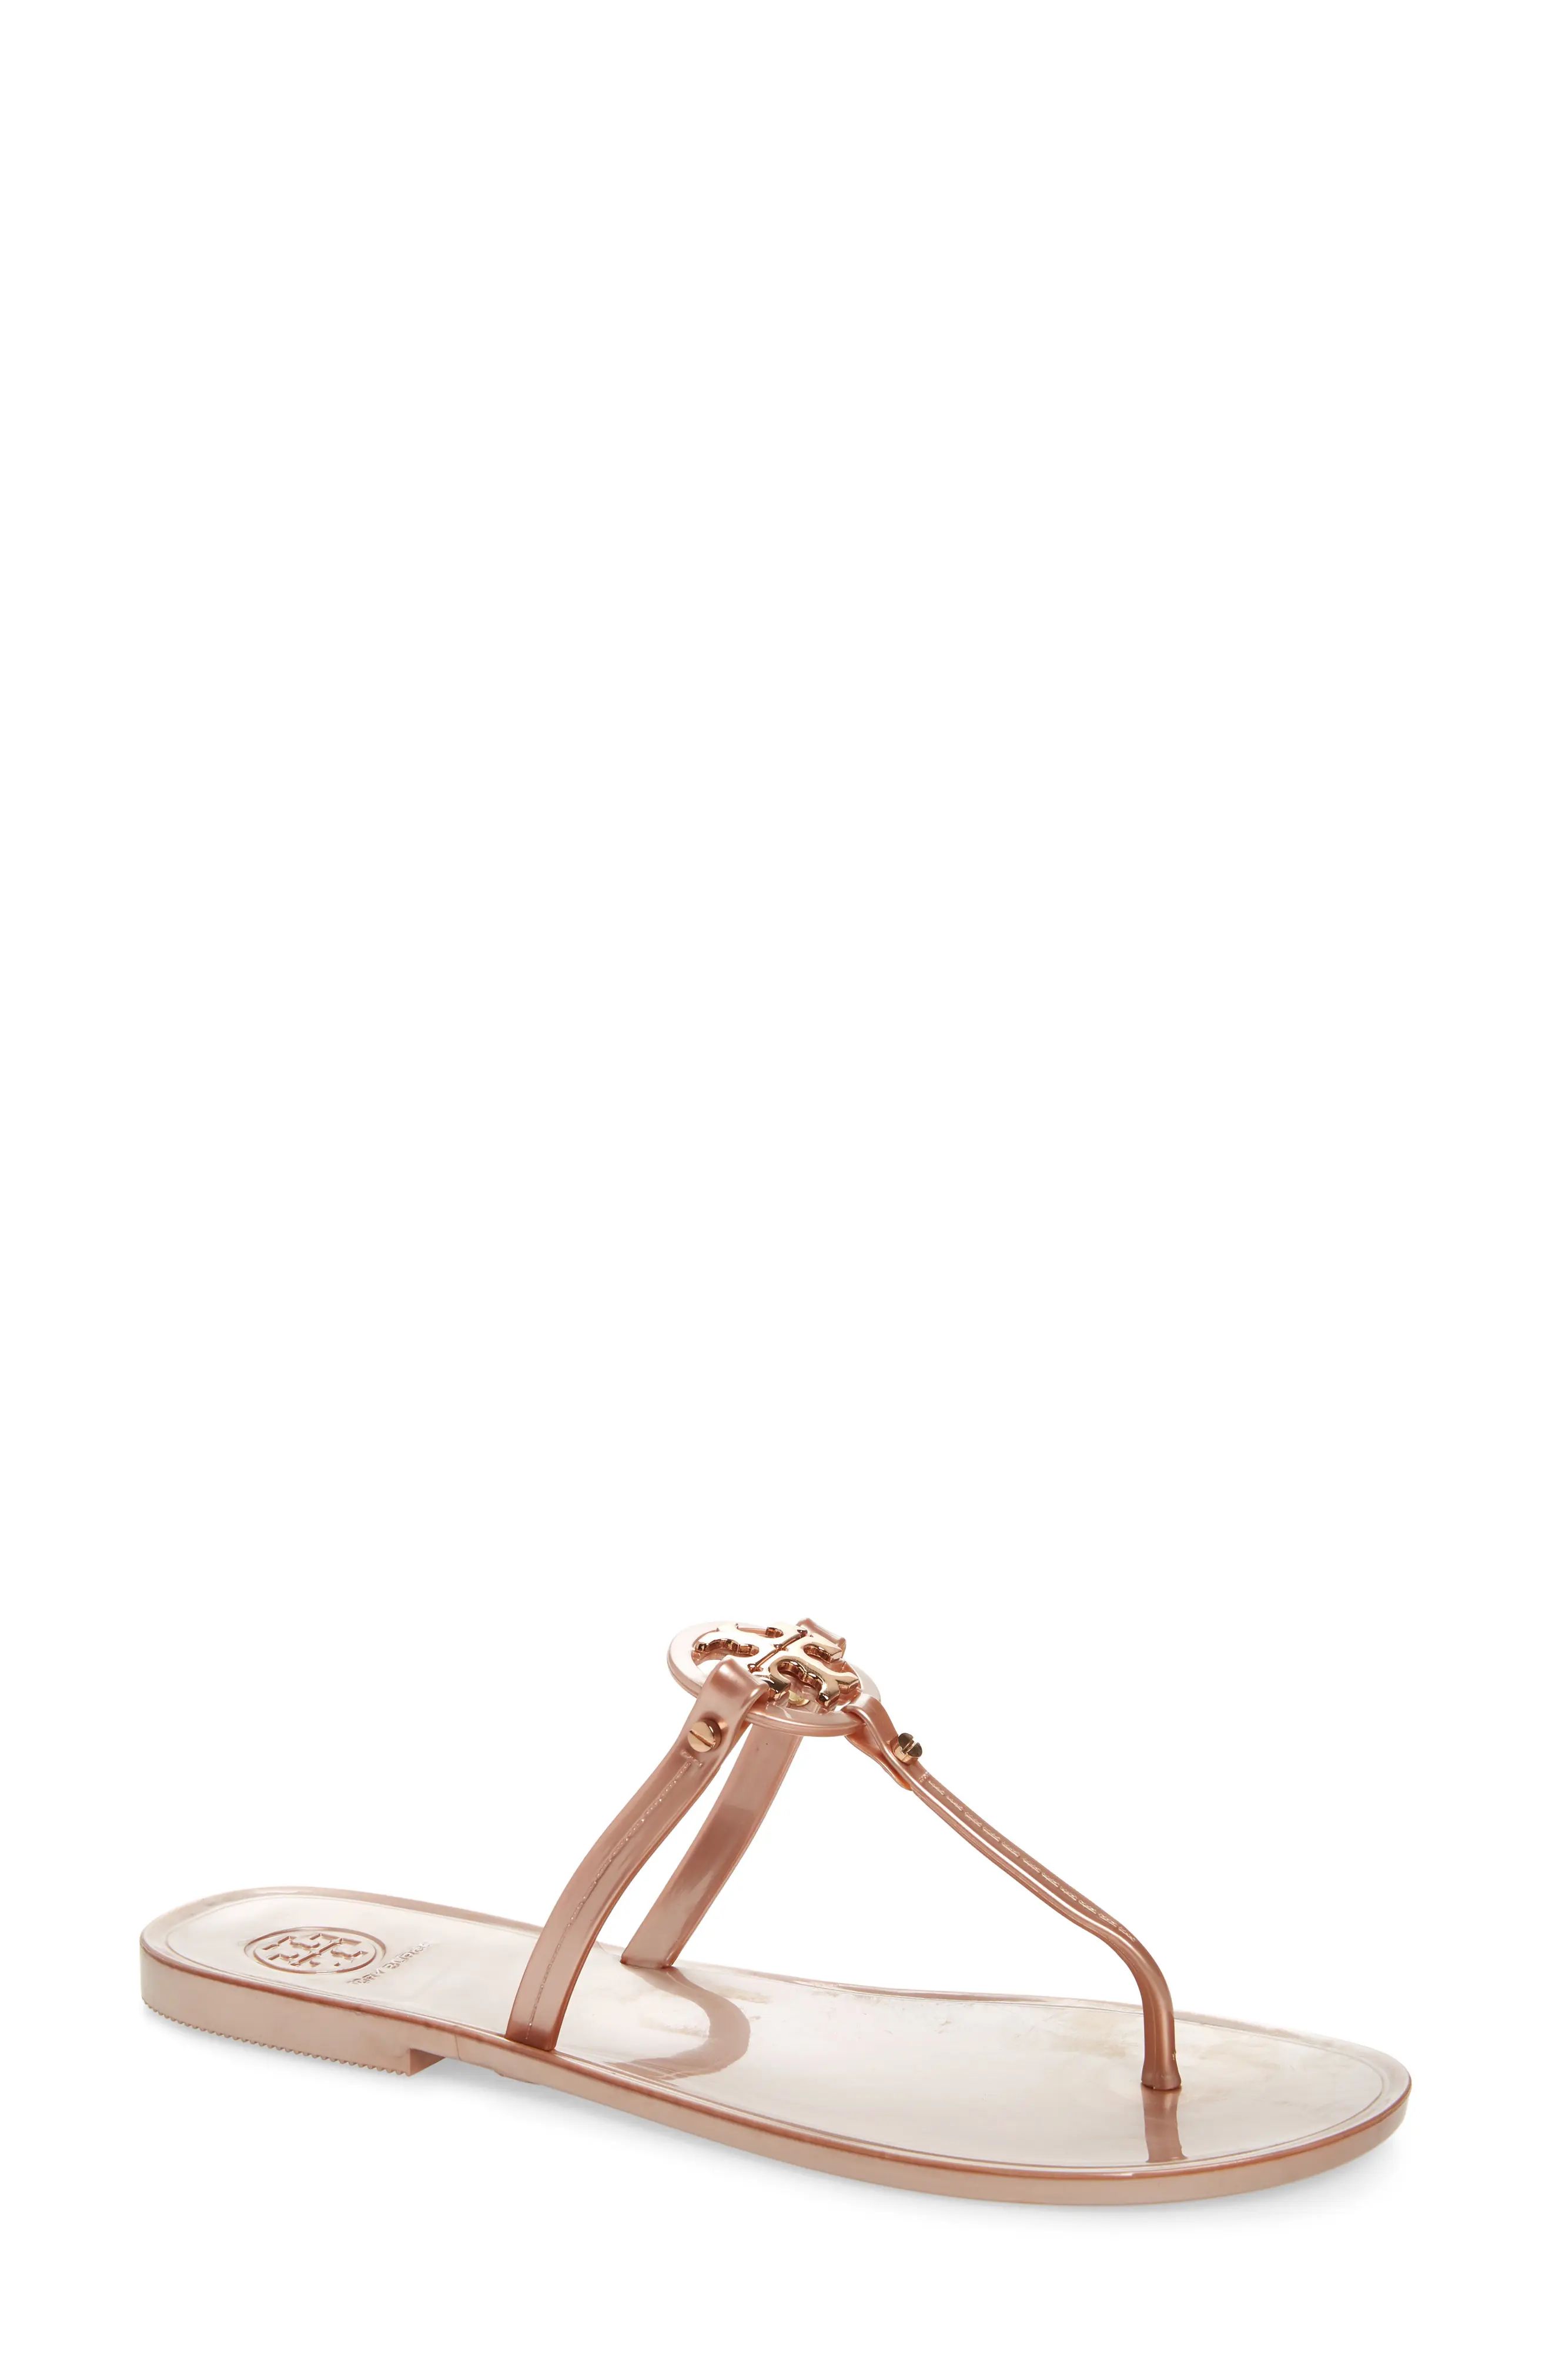 Women's Tory Burch 'Mini Miller' Flat Sandal, Size 5 M - Pink | Nordstrom